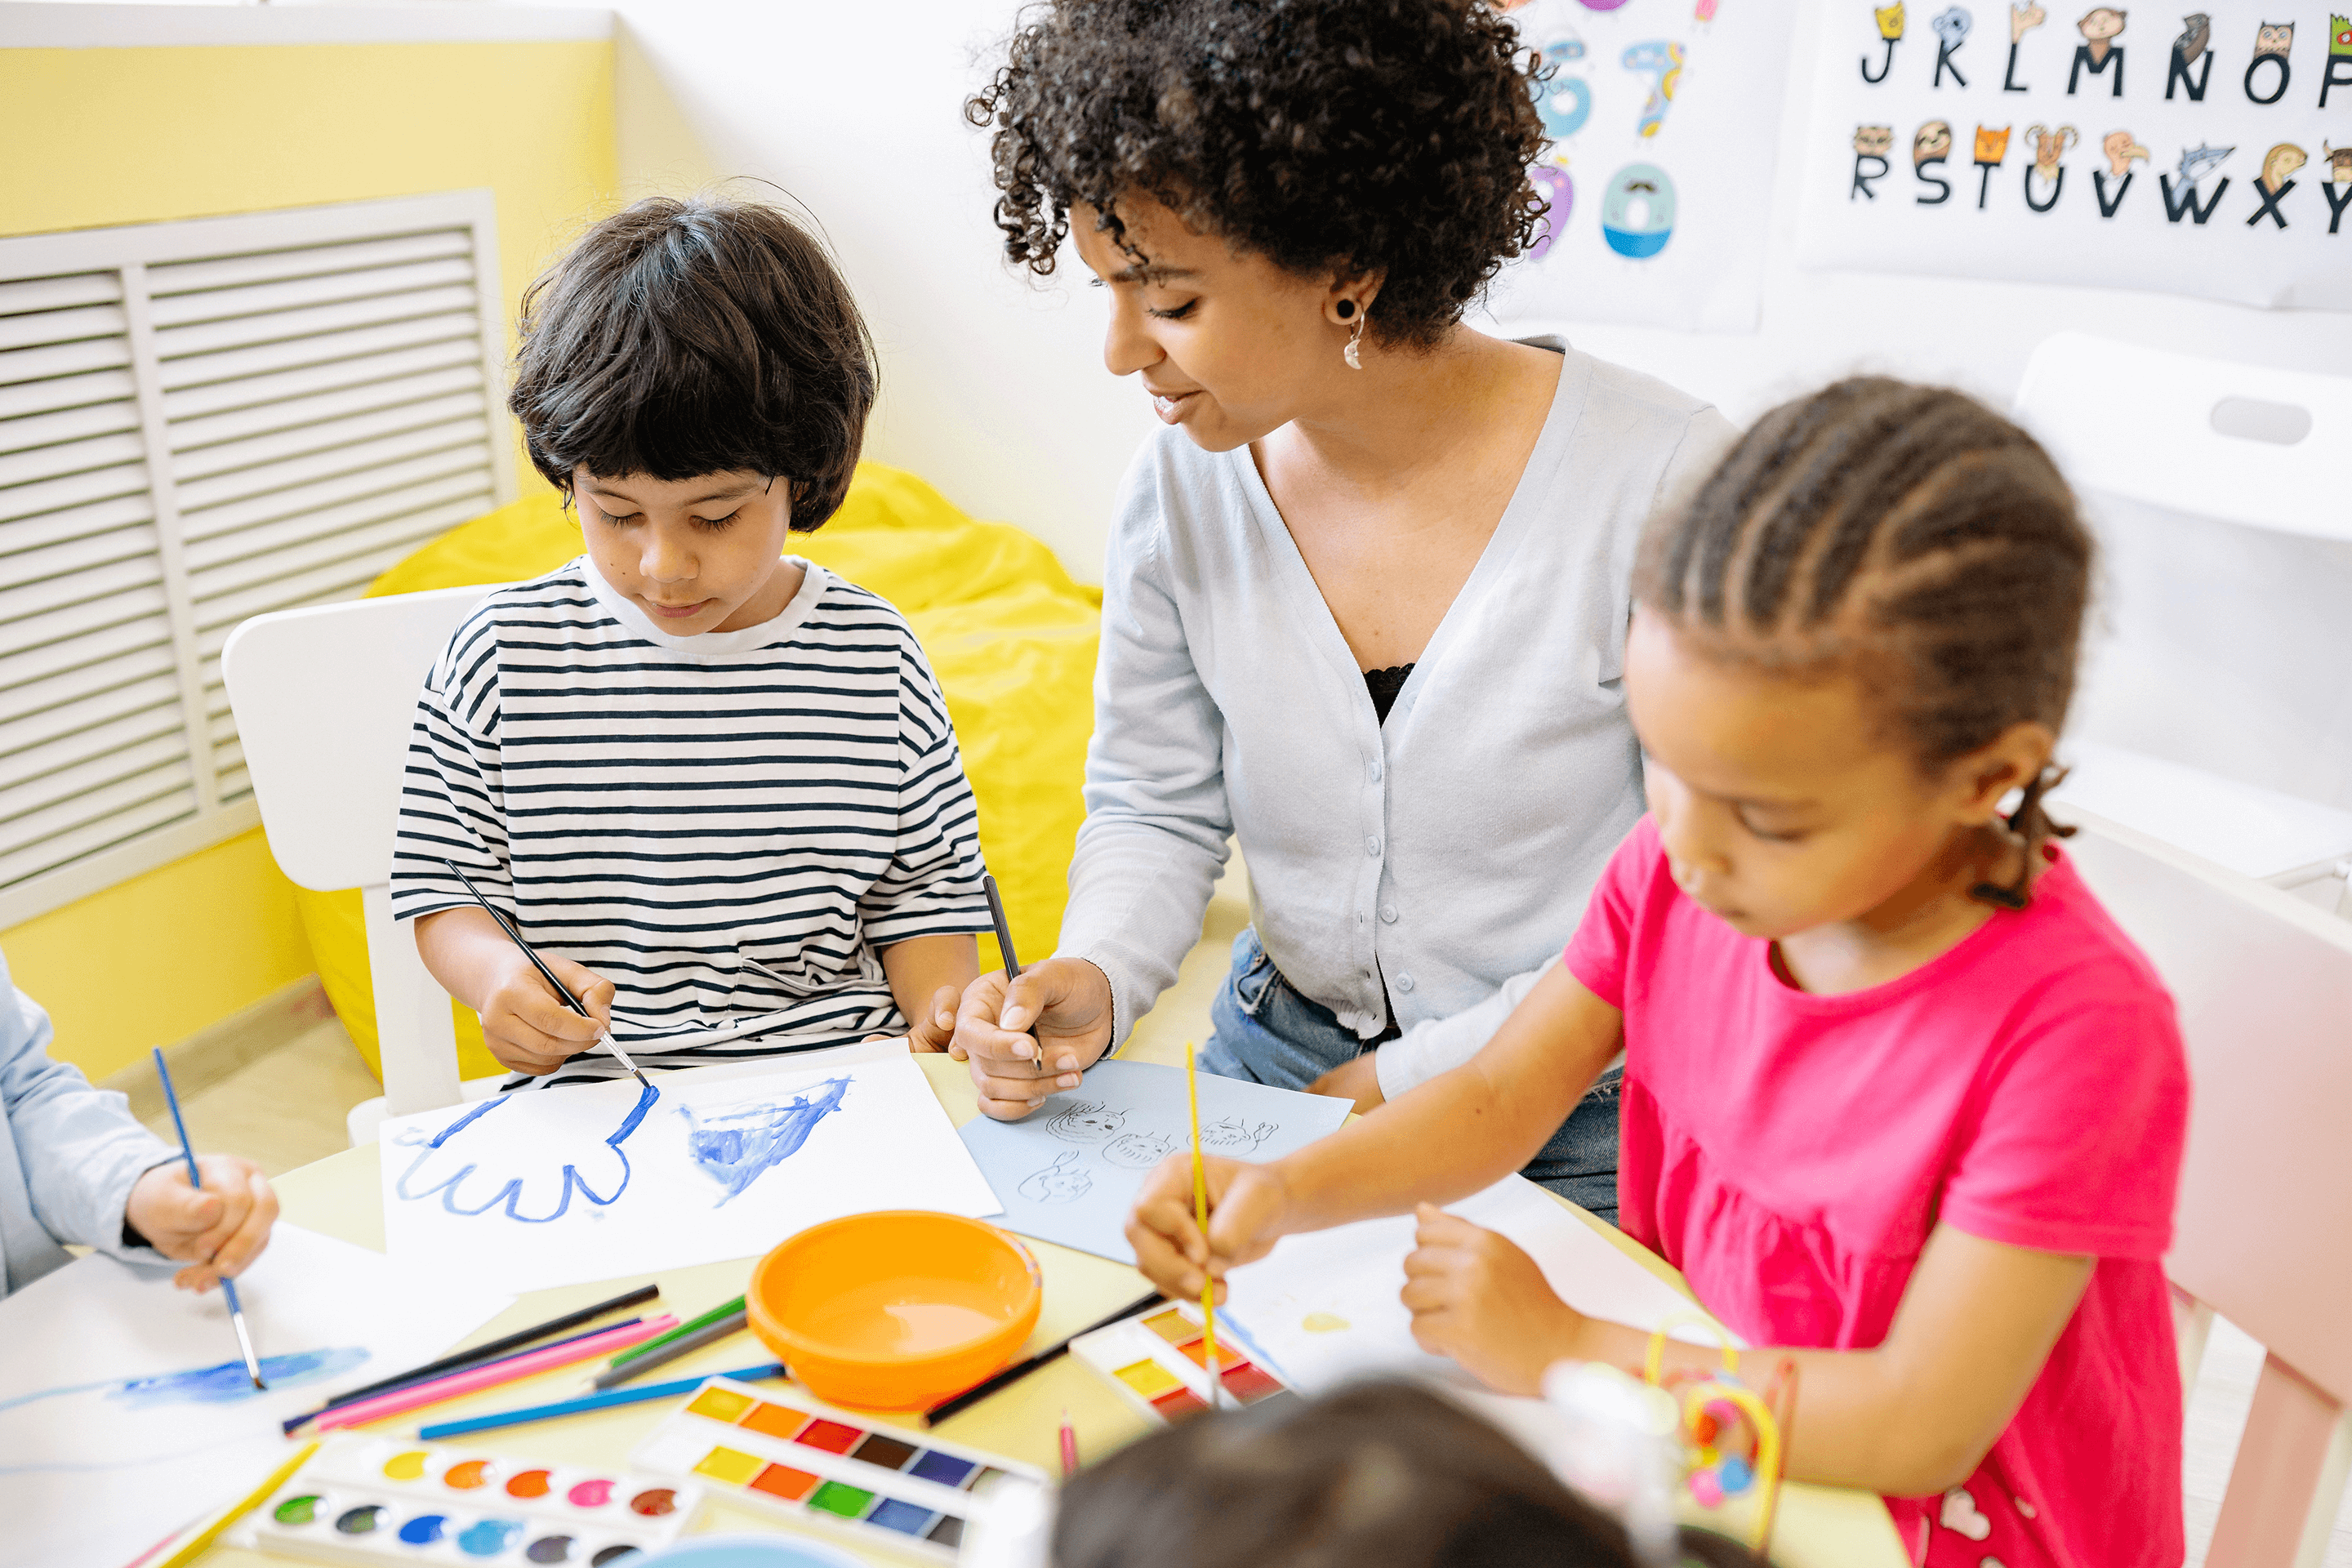 Woman working in behavioral health helping children with developmental needs paint